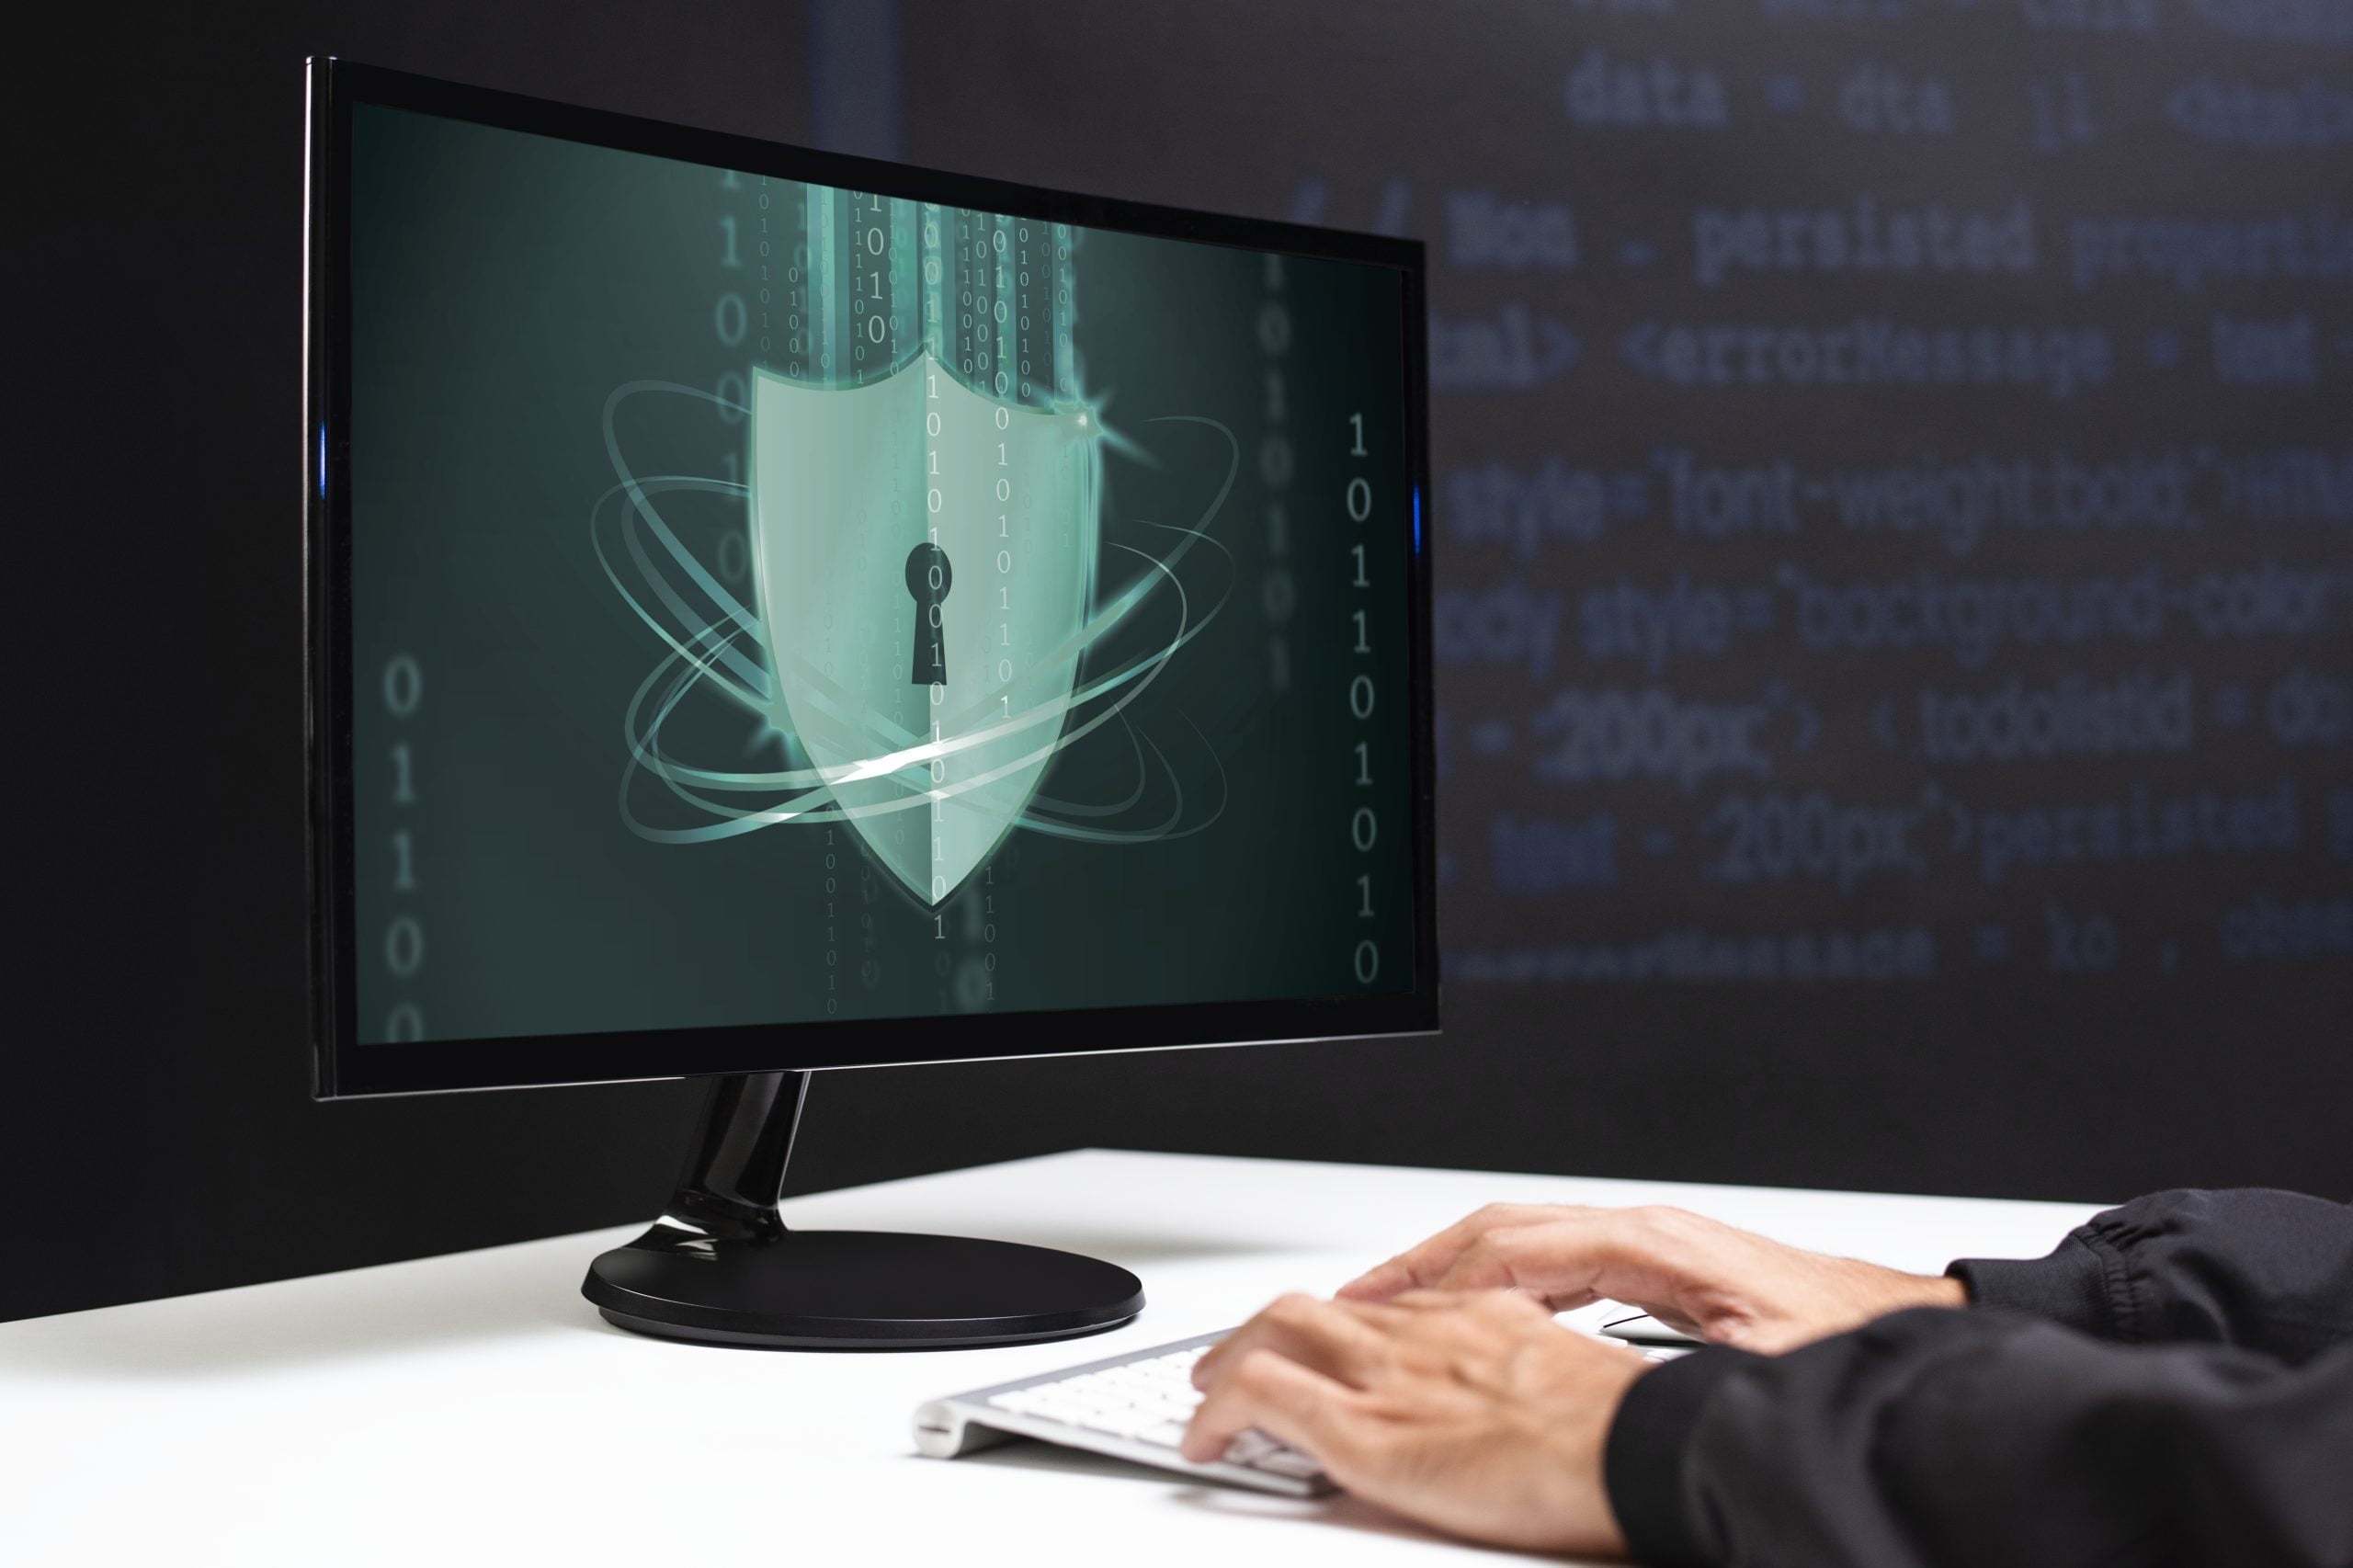 Hacker blocked by firewall security image on desktop monitor